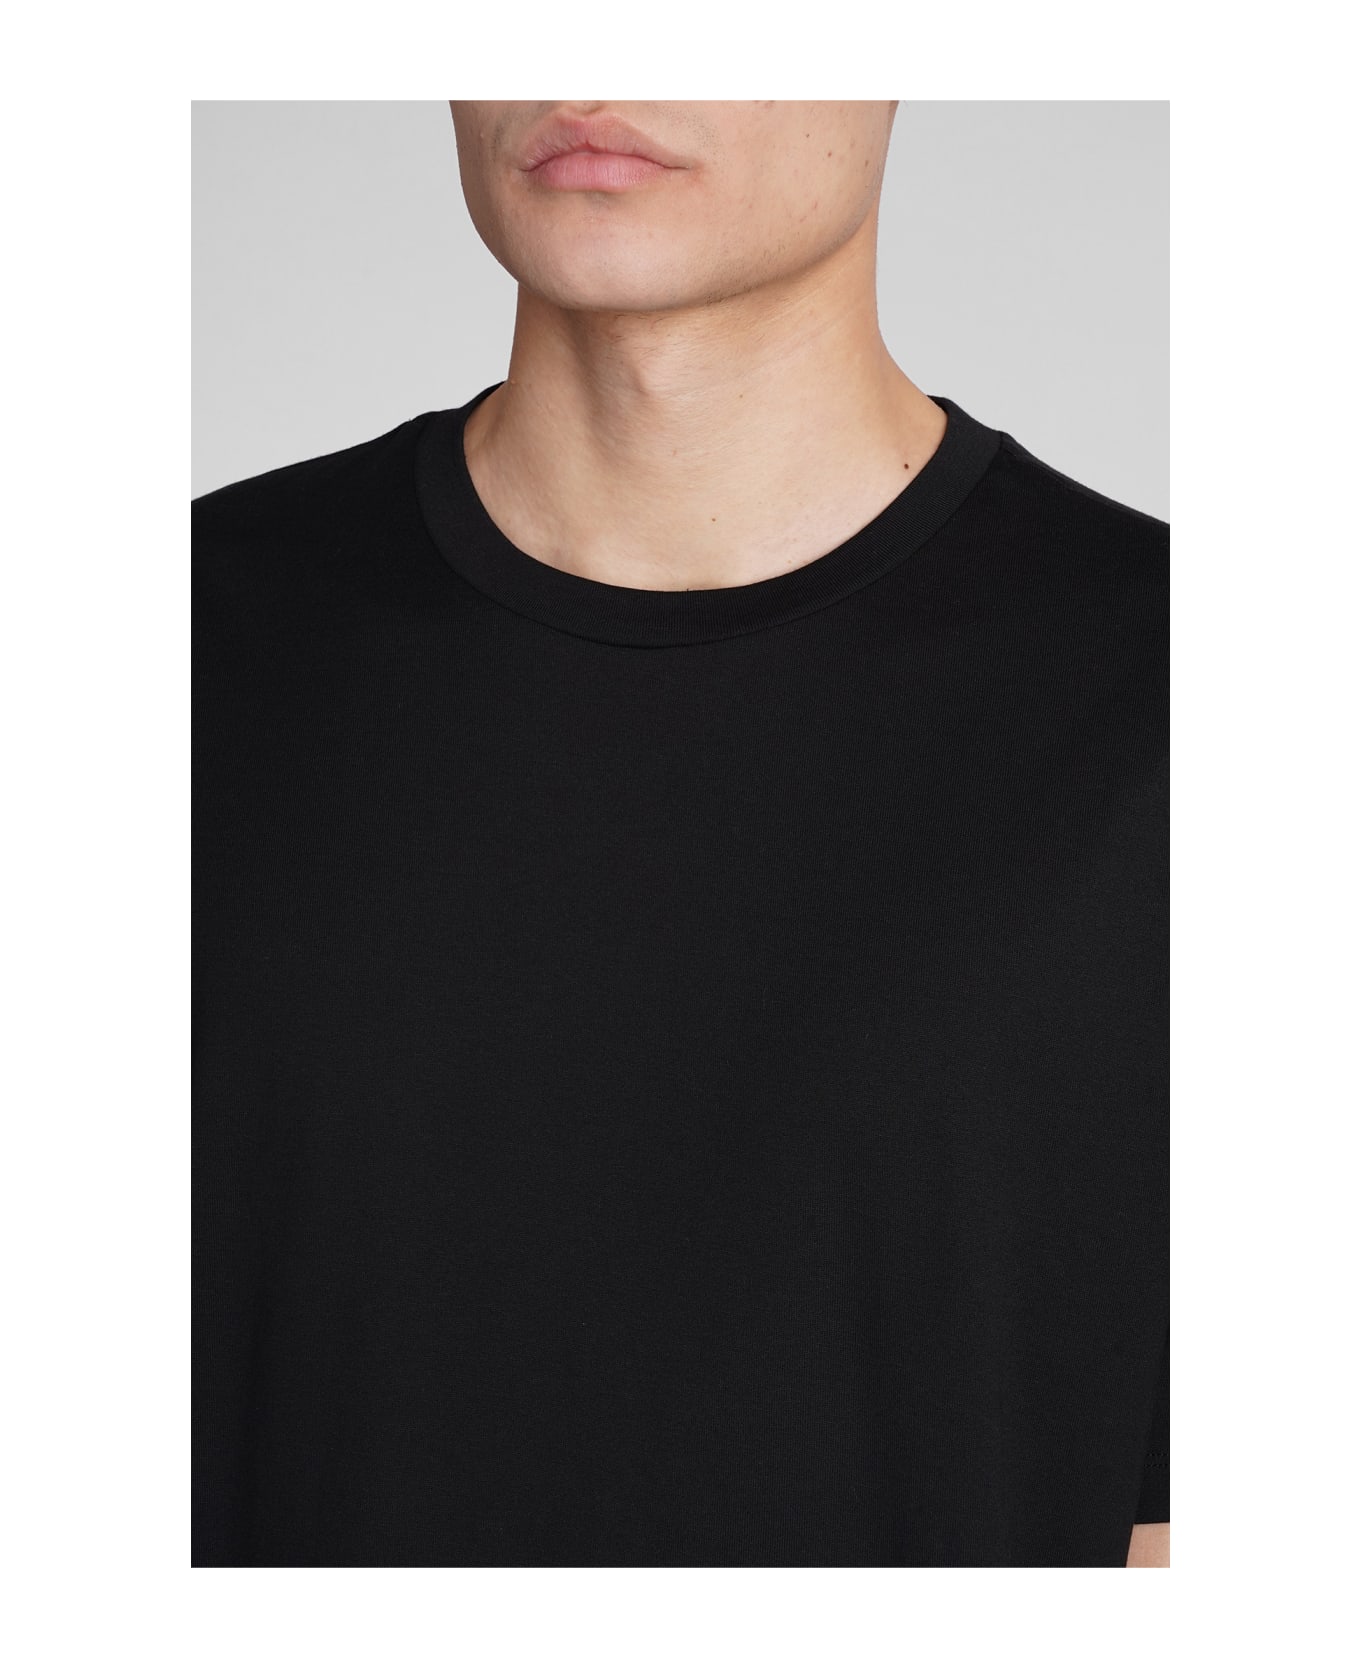 Roberto Collina T-shirt In Black Cotton - black